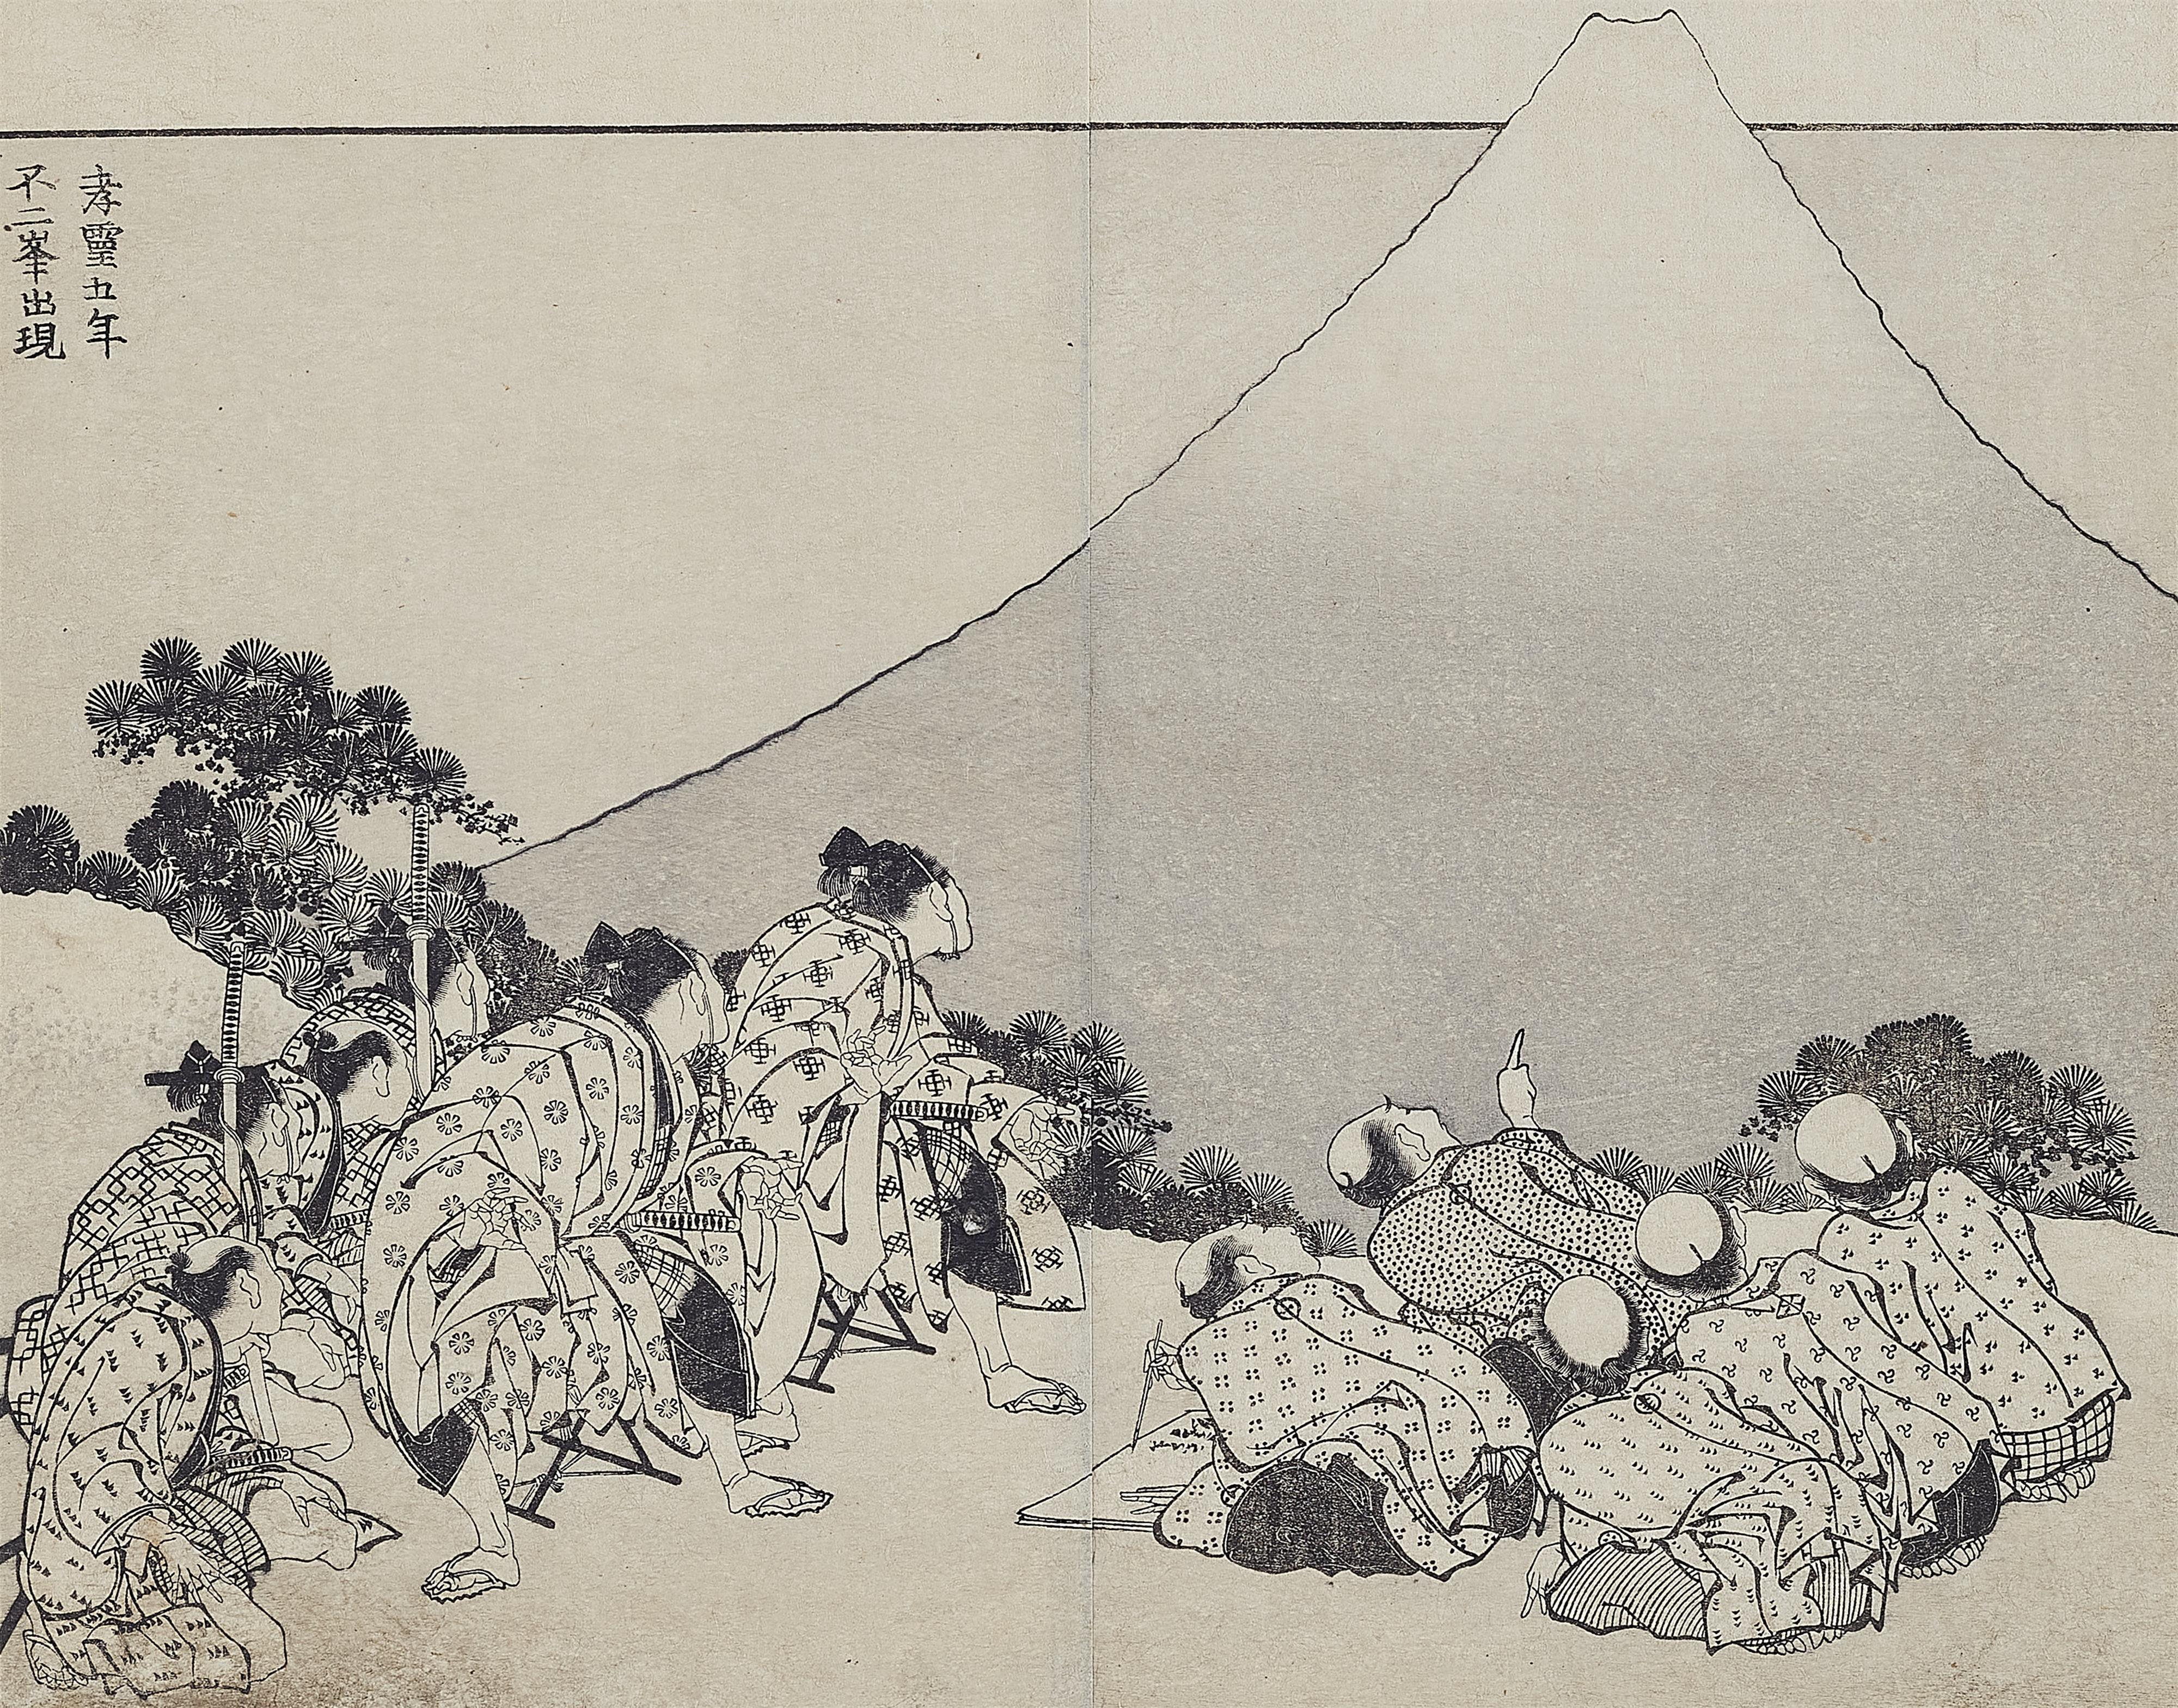 Katsushika Hokusai - Black and white illustrations from the album Fugaku hyakkei - image-14